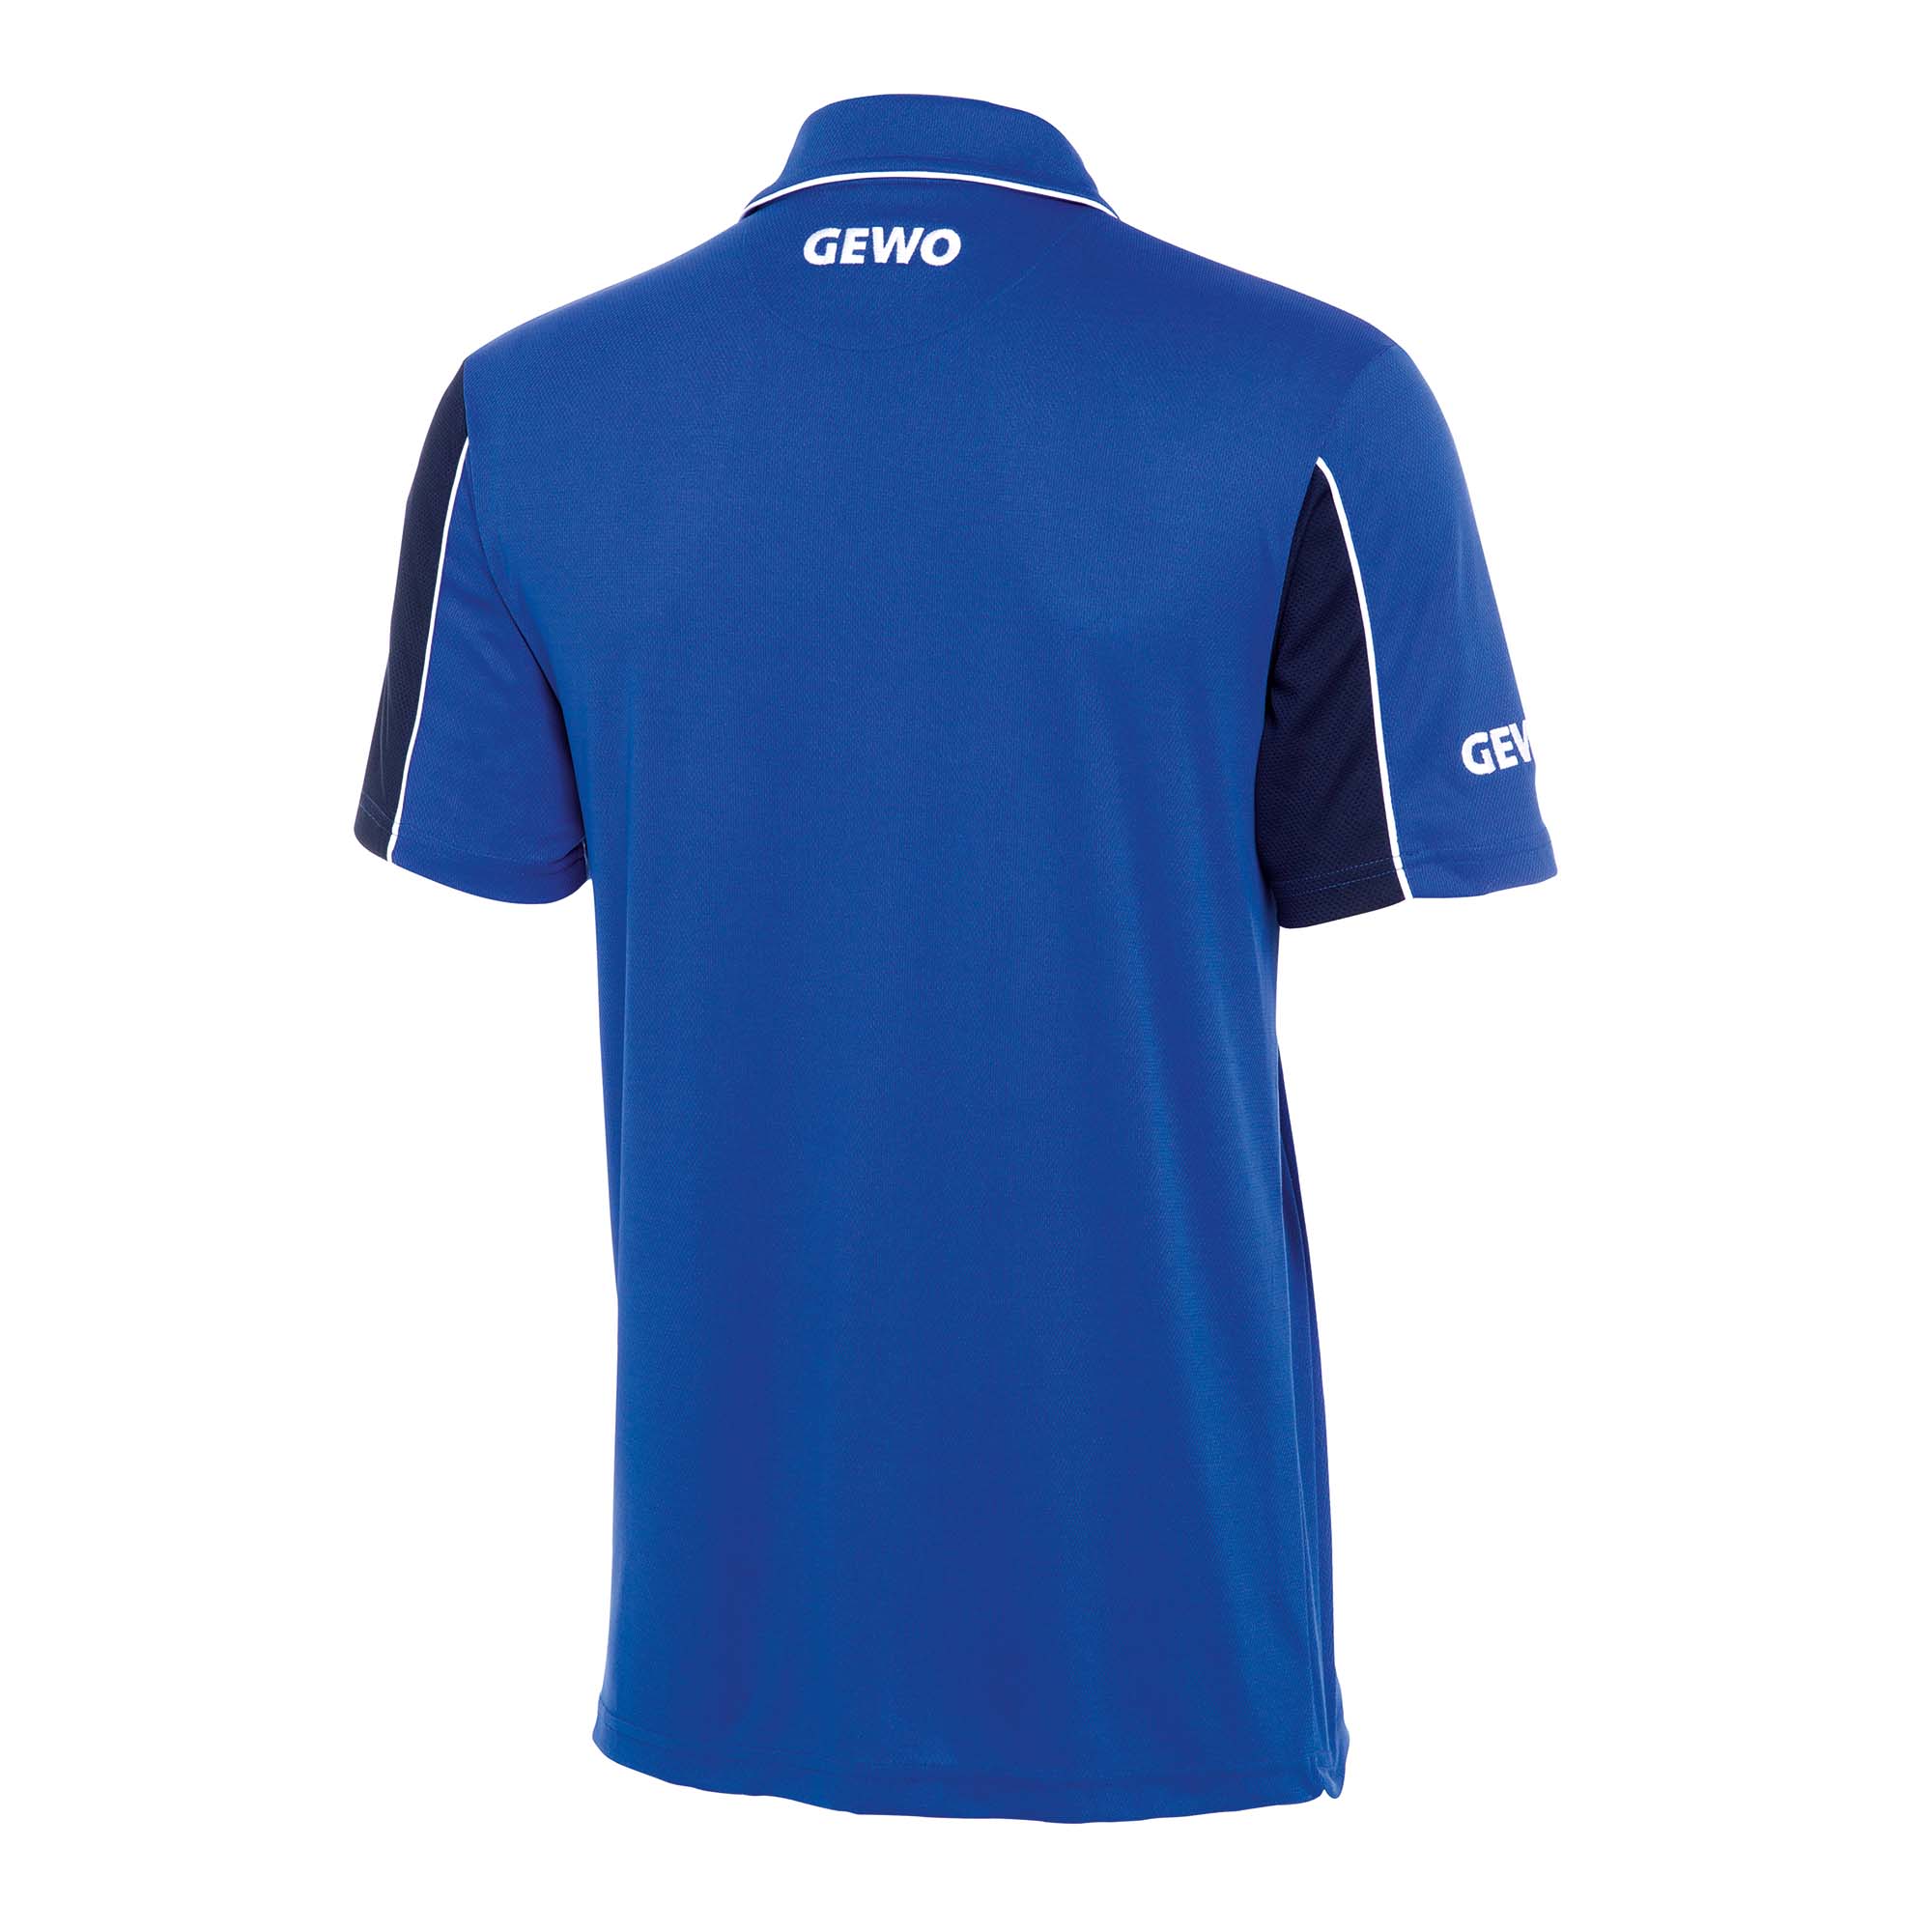 GEWO Shirt Teramo S18-2 Cotton blue/navy S